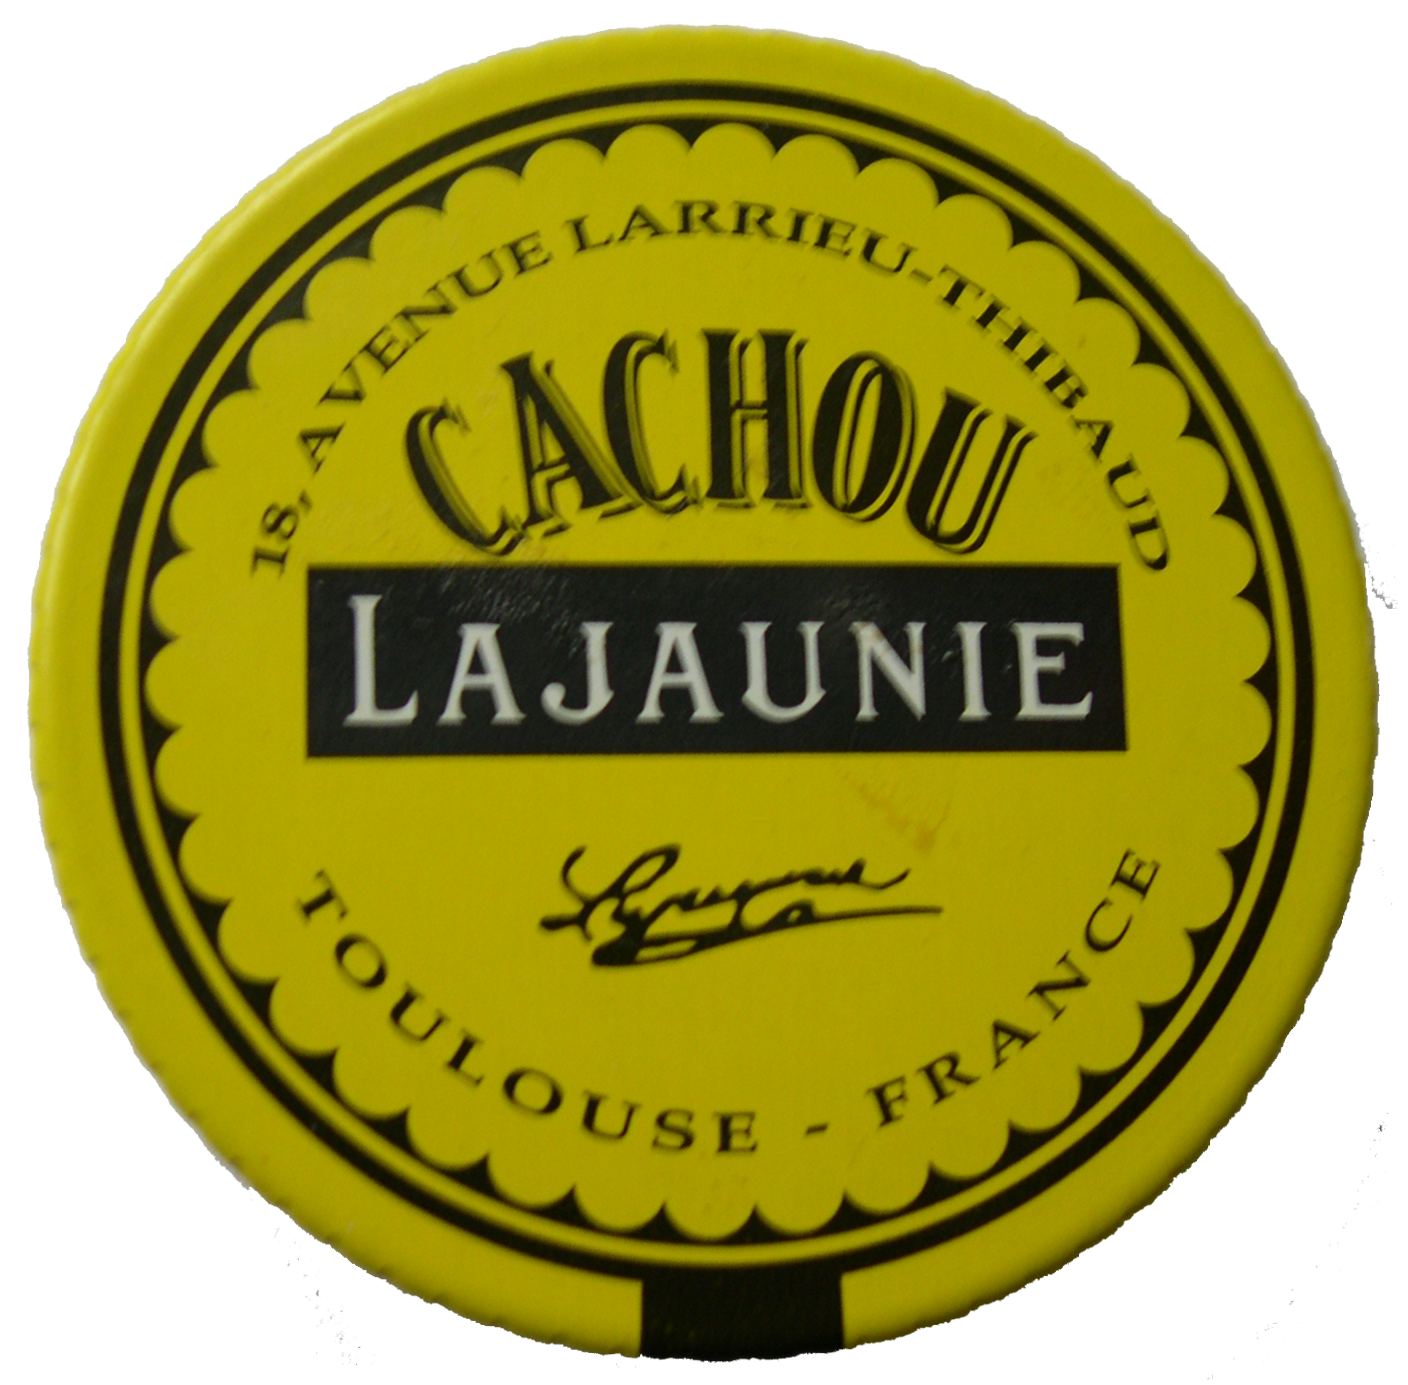 File:Cachou lajaunie.png - Wikimedia Commons